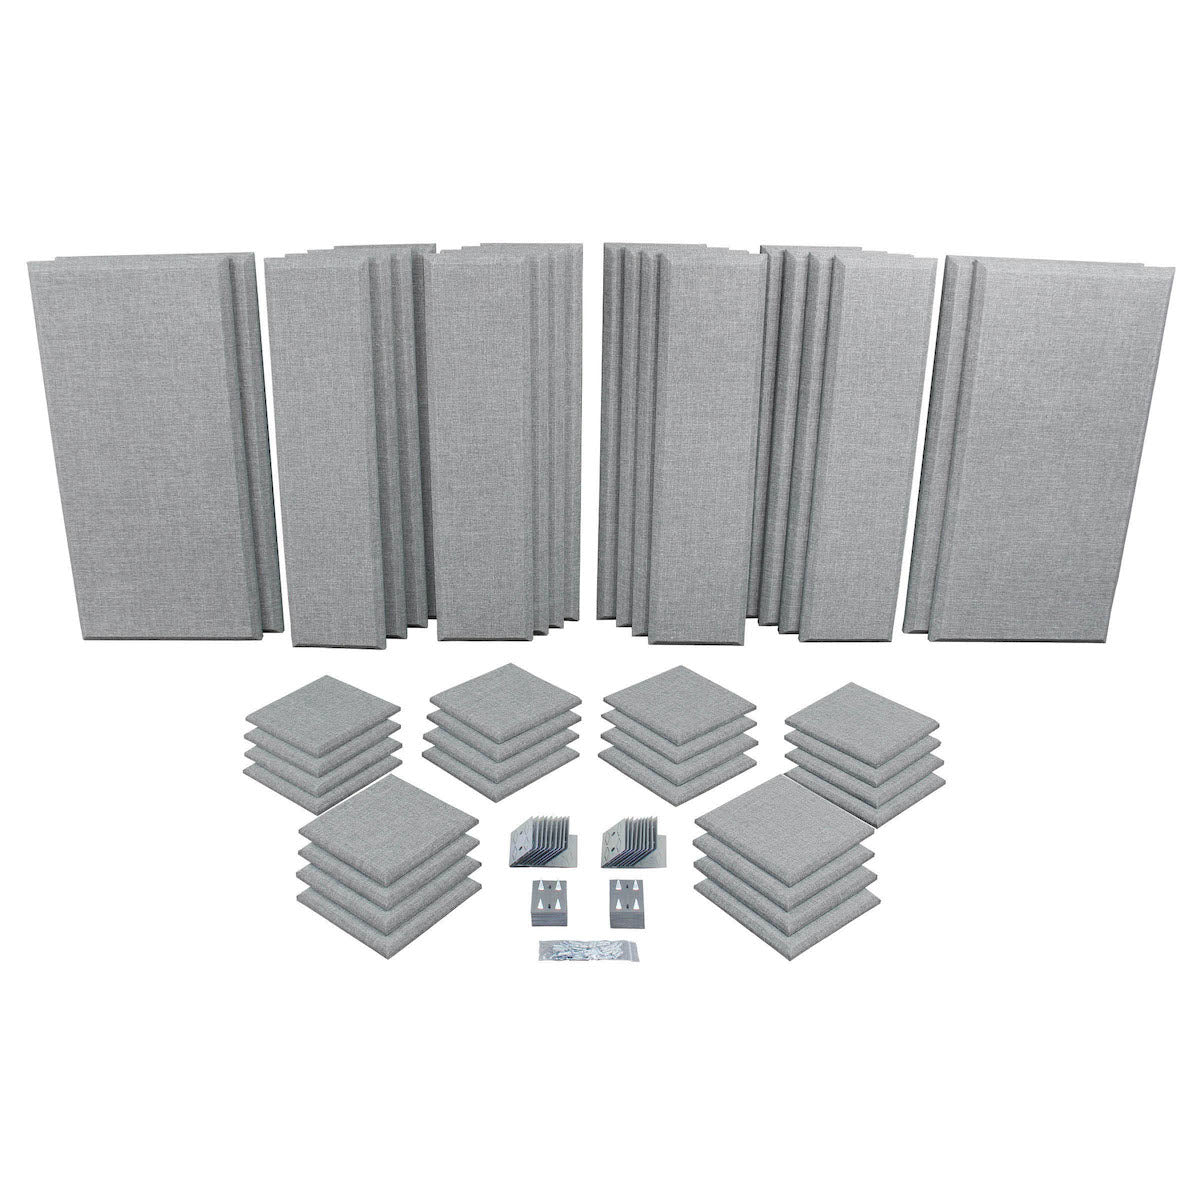 Primacoustic London 16 - Acoustic Panel Room Kit, grey